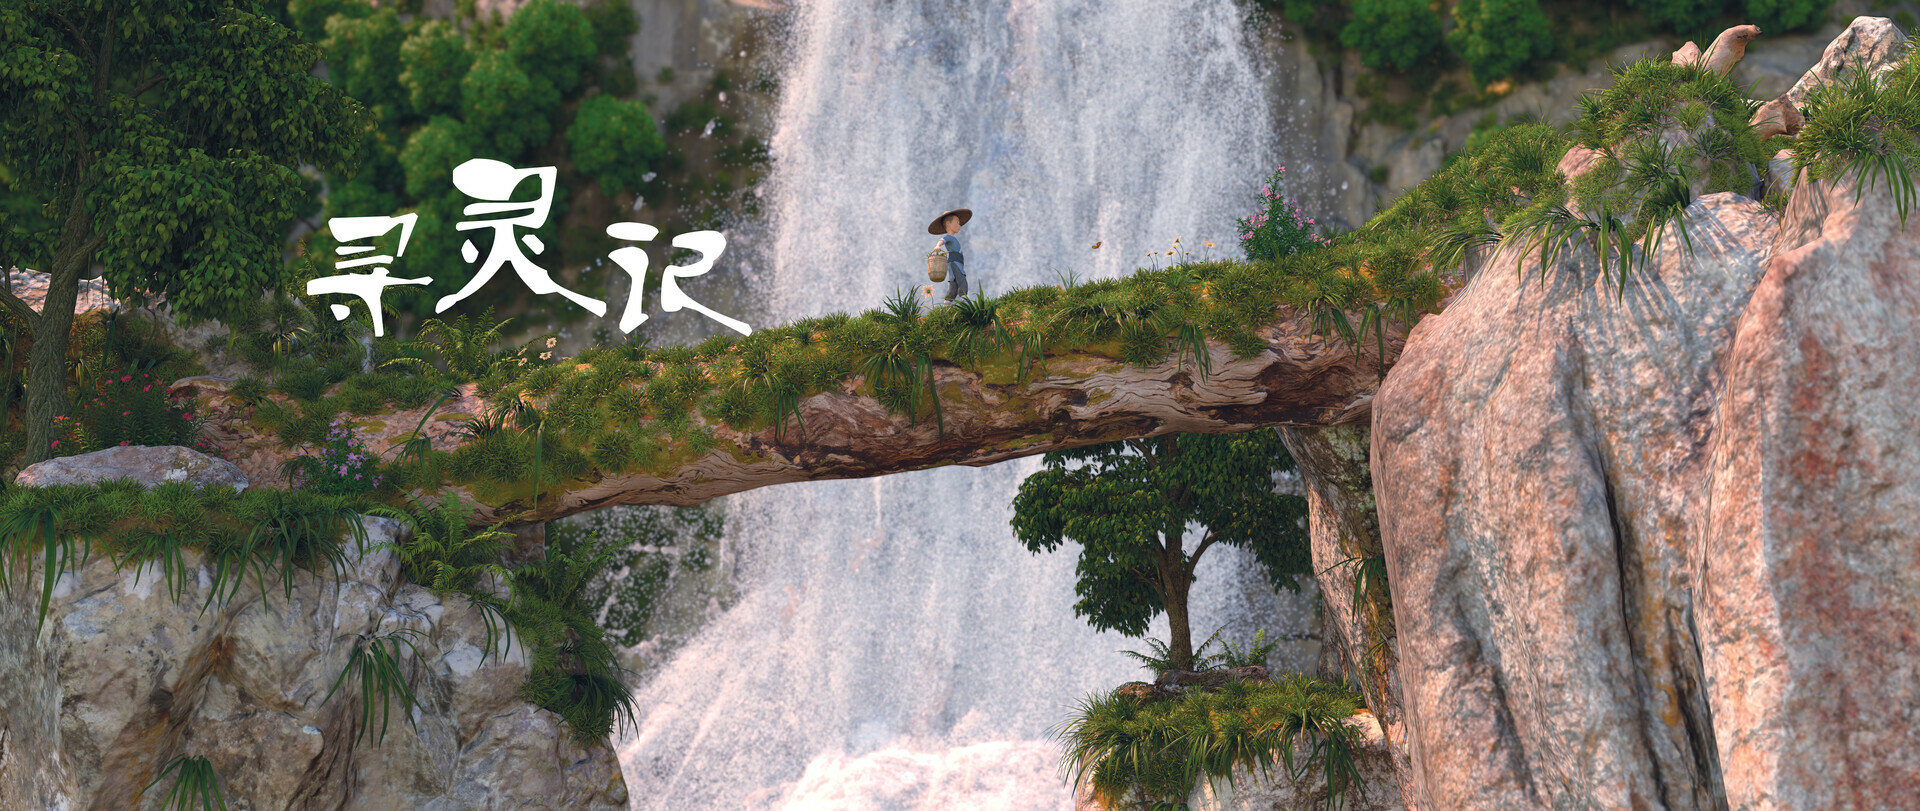 Clarence Kane - CGI 3D Animated Short Film:SOUL(寻灵记)by CC.